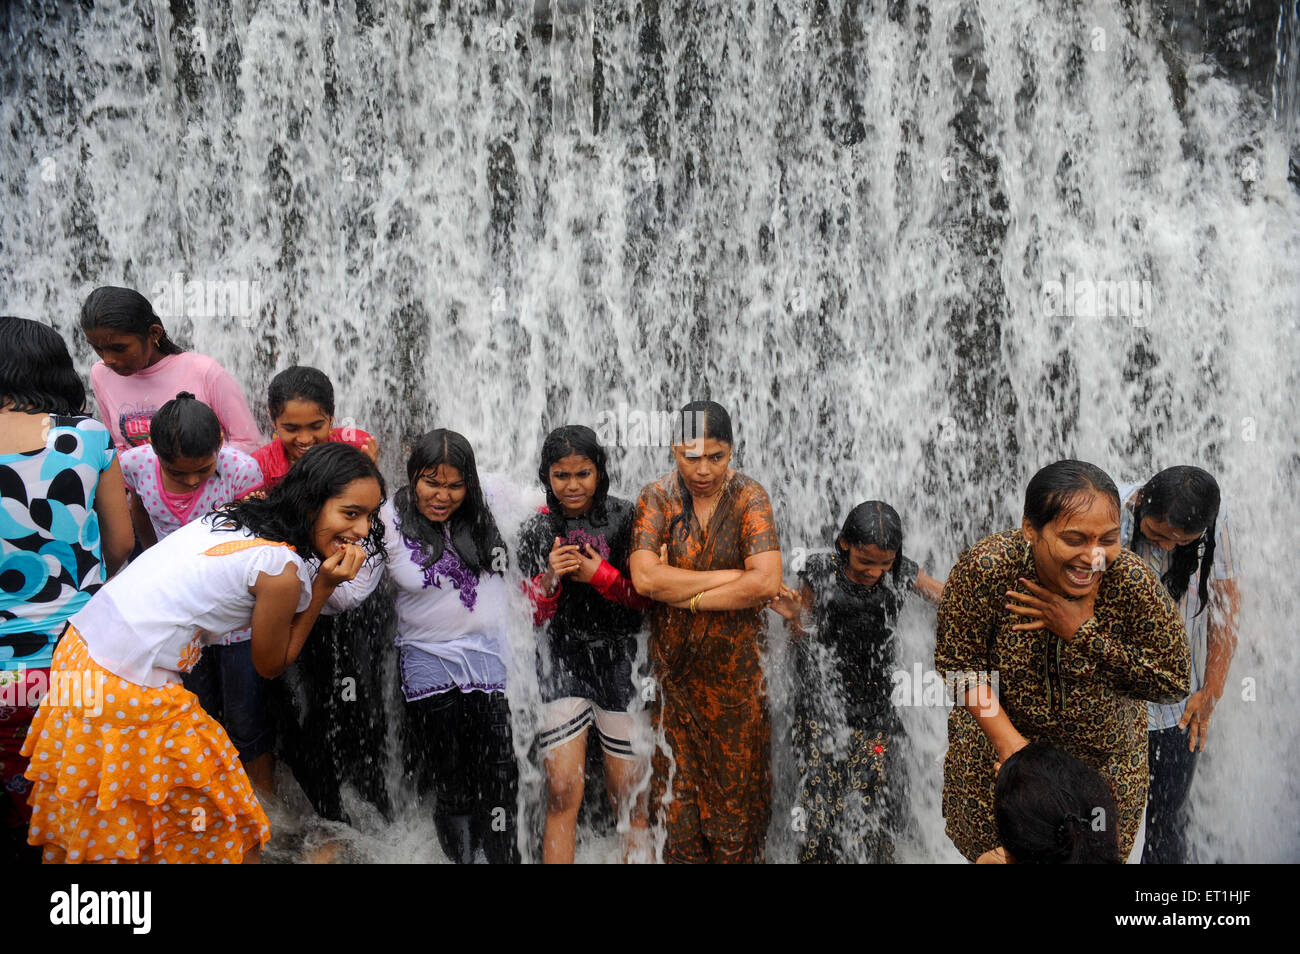 girls getting wet under waterfall, India, Asia, MR#400 Stock Photo